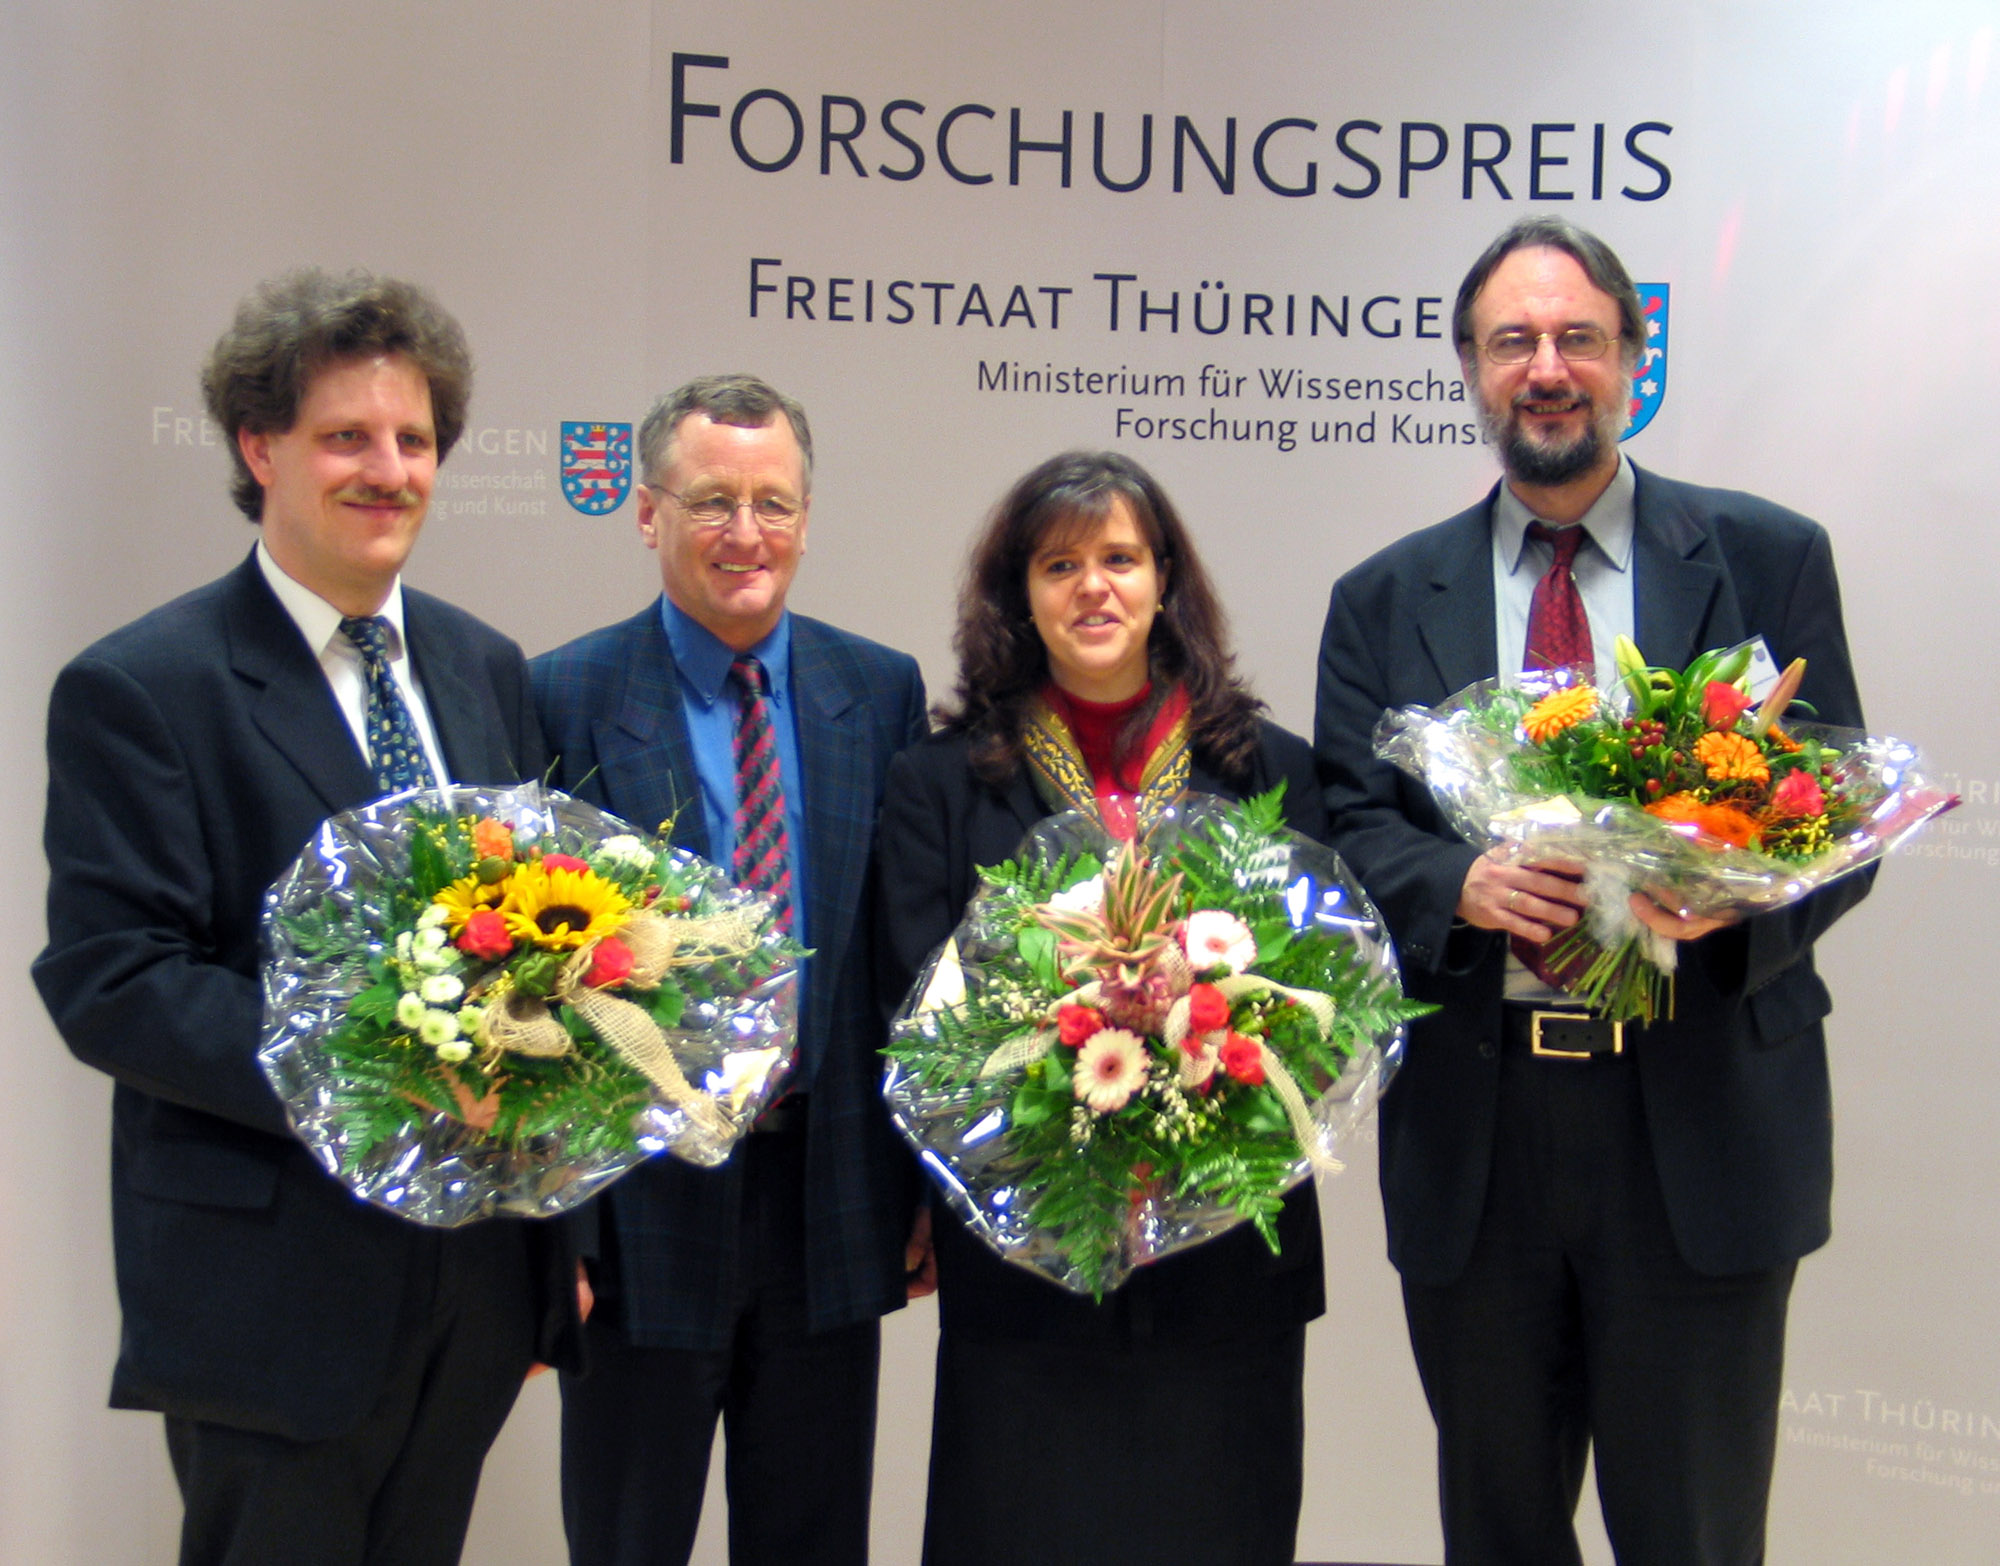 The winners of the research prize: Prof. Thomas Sporer, Diemer de Vries, Dr. Sandra Brix and Prof. Karlheinz Brandenburg.